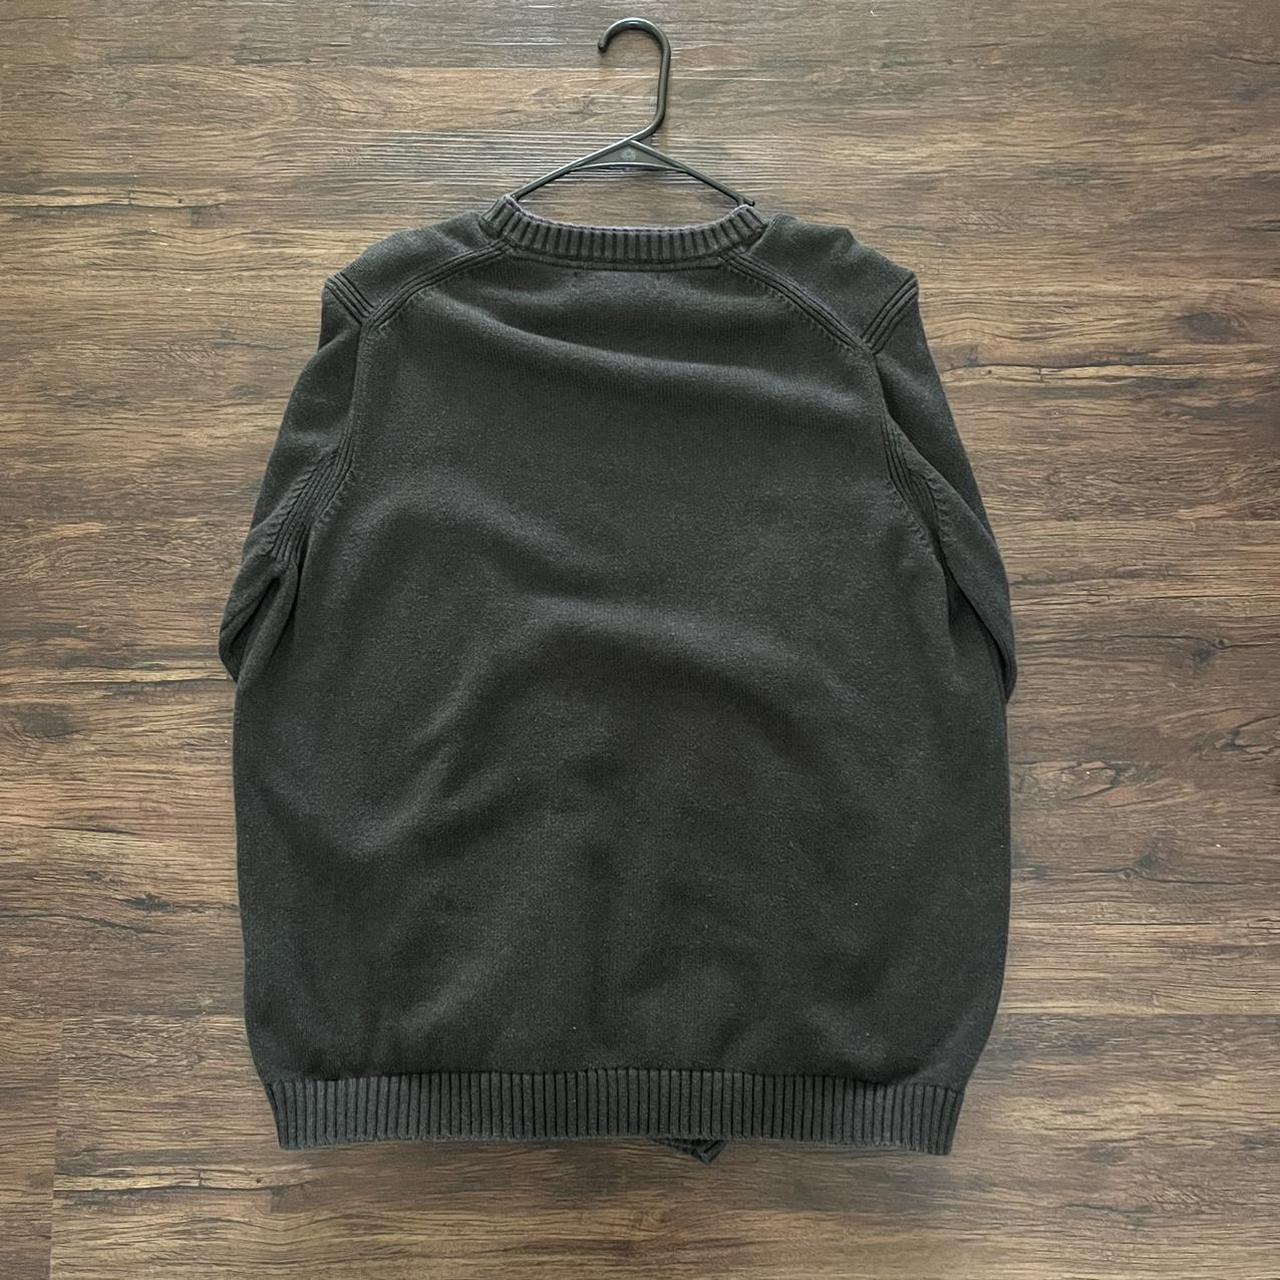 Tommy Hilfiger Men's Black Sweatshirt (2)